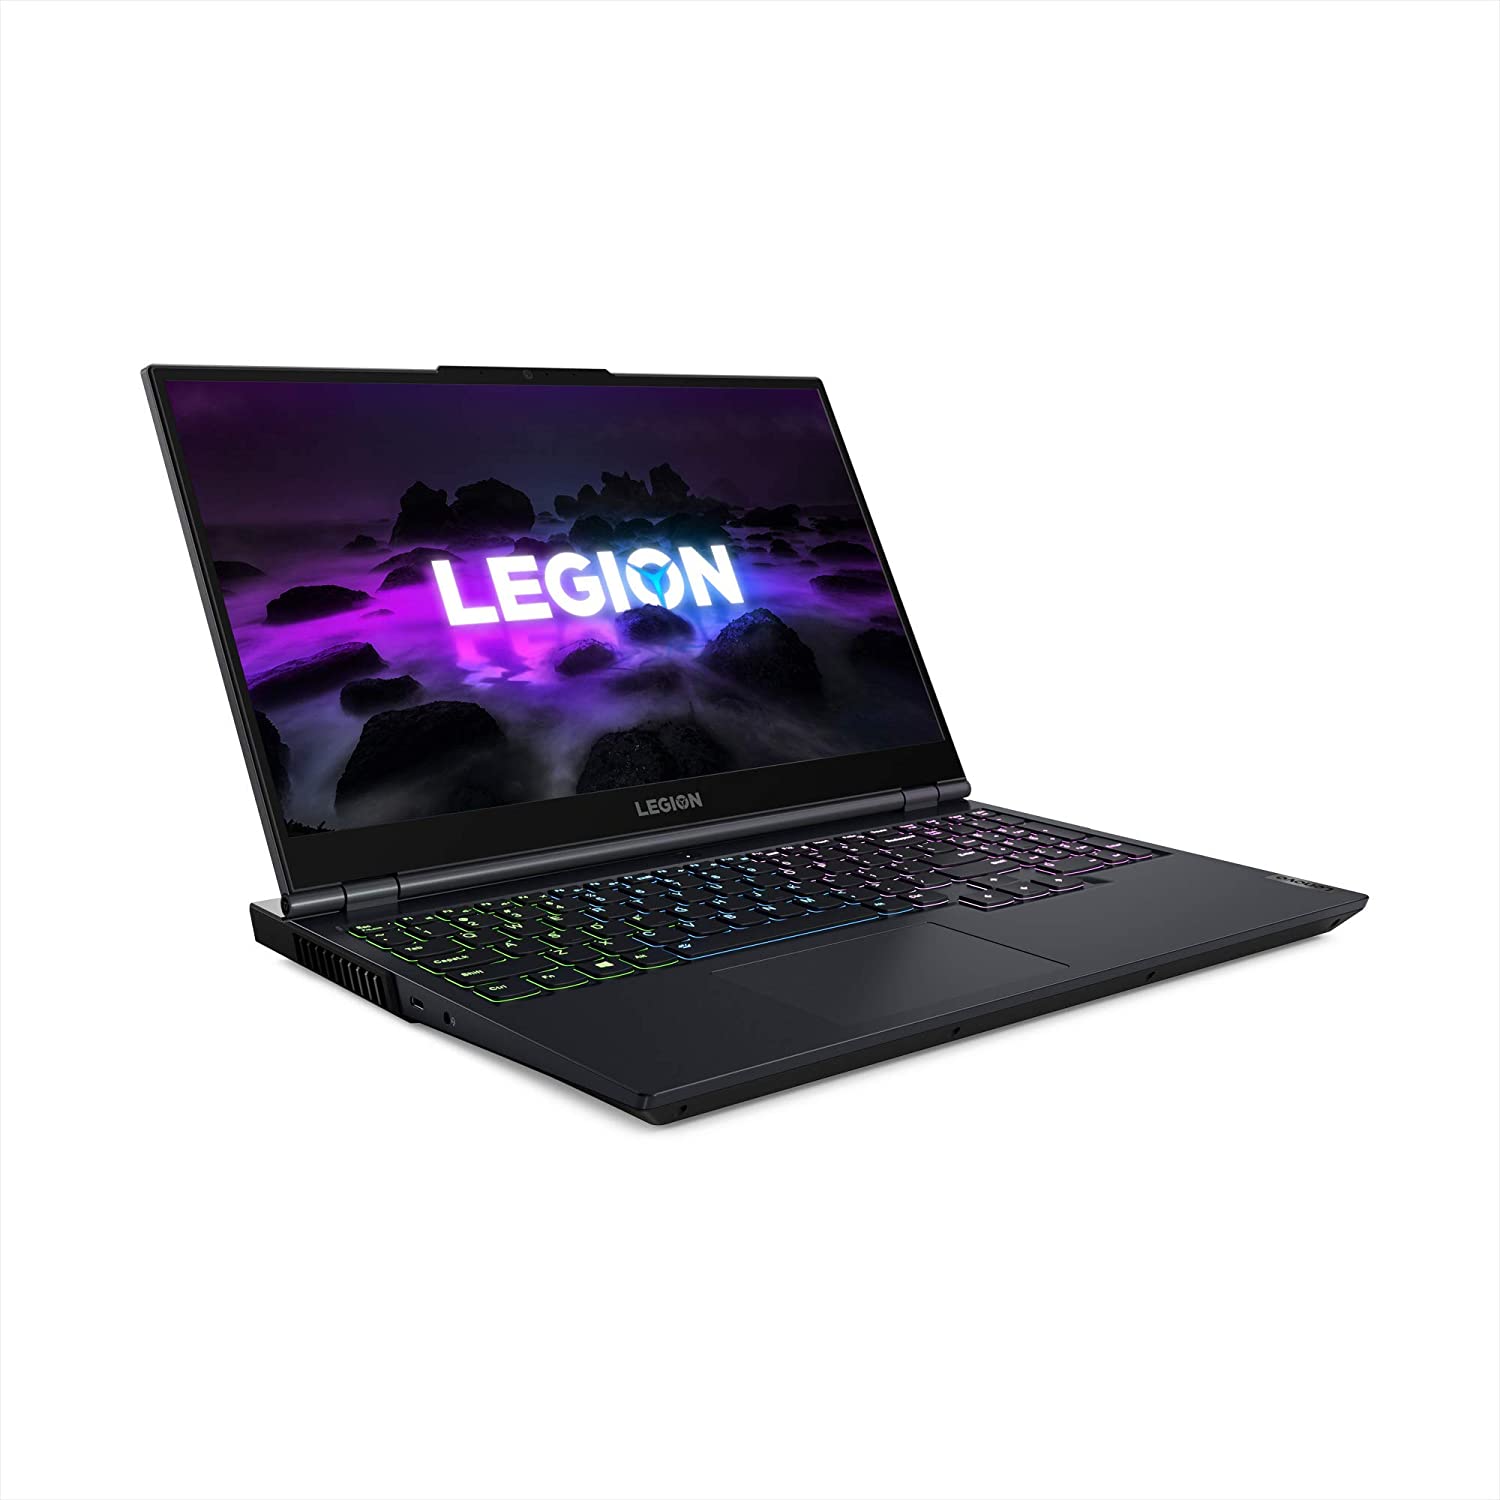 legion laptop detailed review